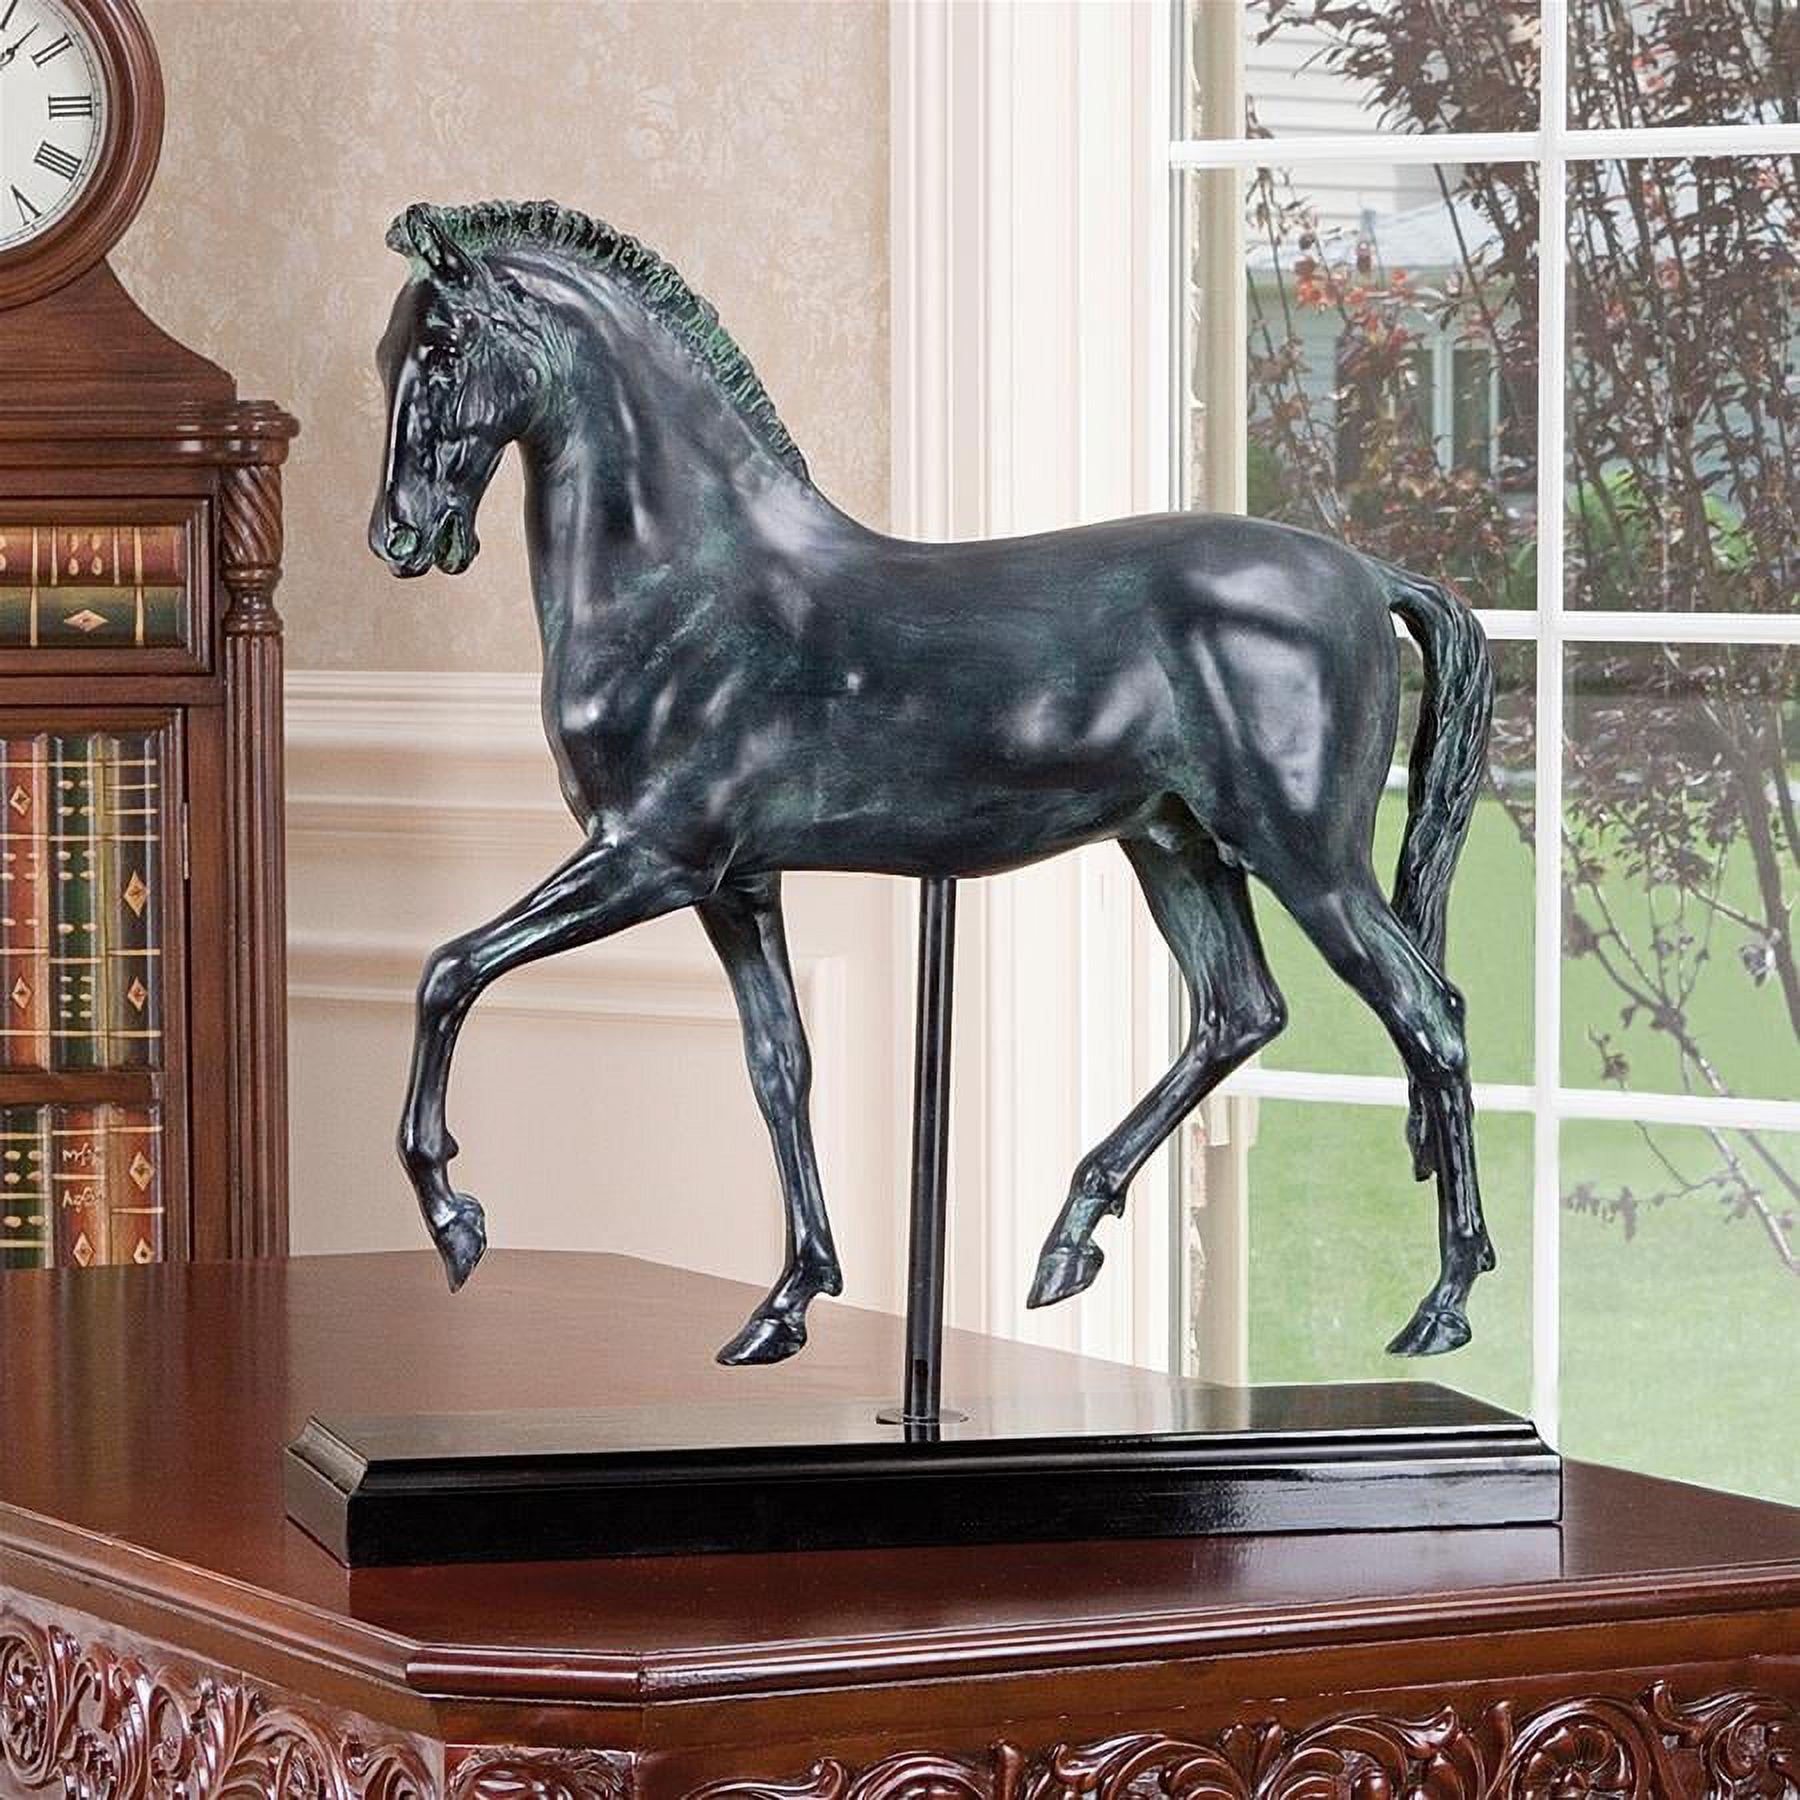 Design Toscano Classical Horse Study Sculpture - image 1 of 2